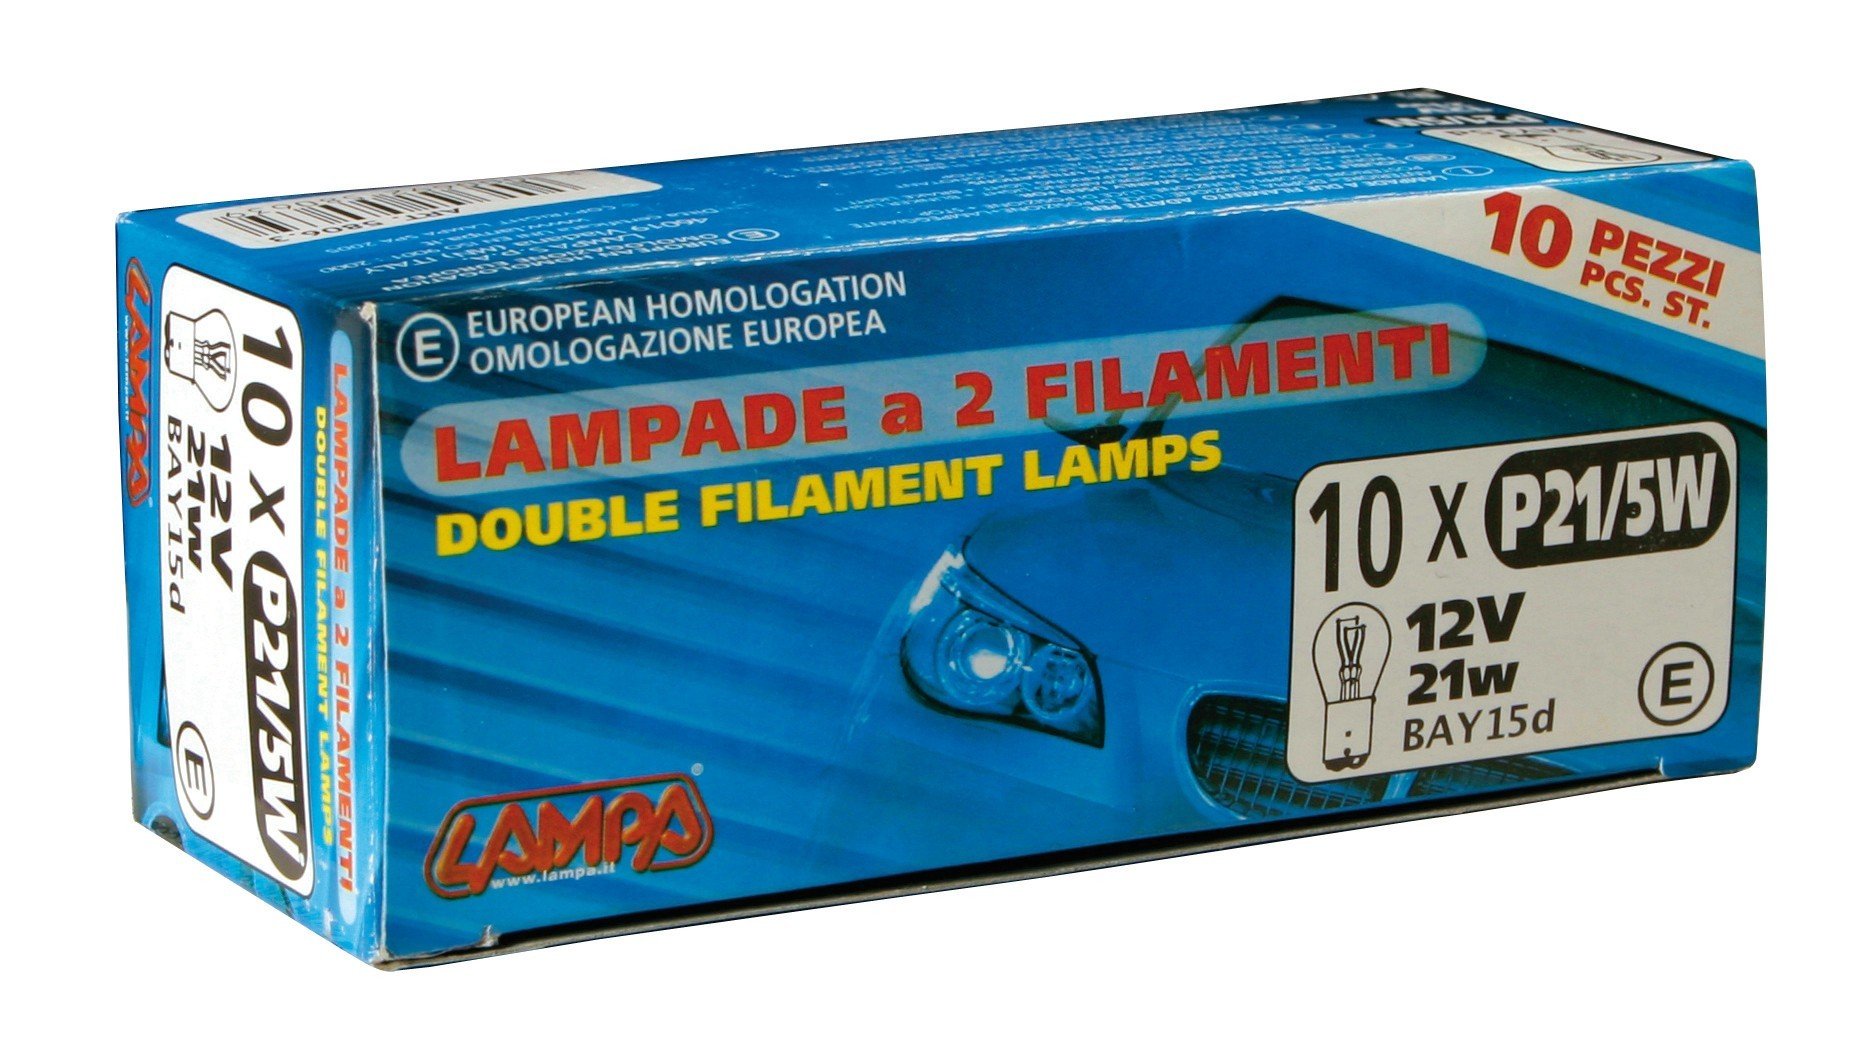 12V Lampada 2 filamenti - P21/5W - 21/5W - BAY15d - 10 pz - Scatola